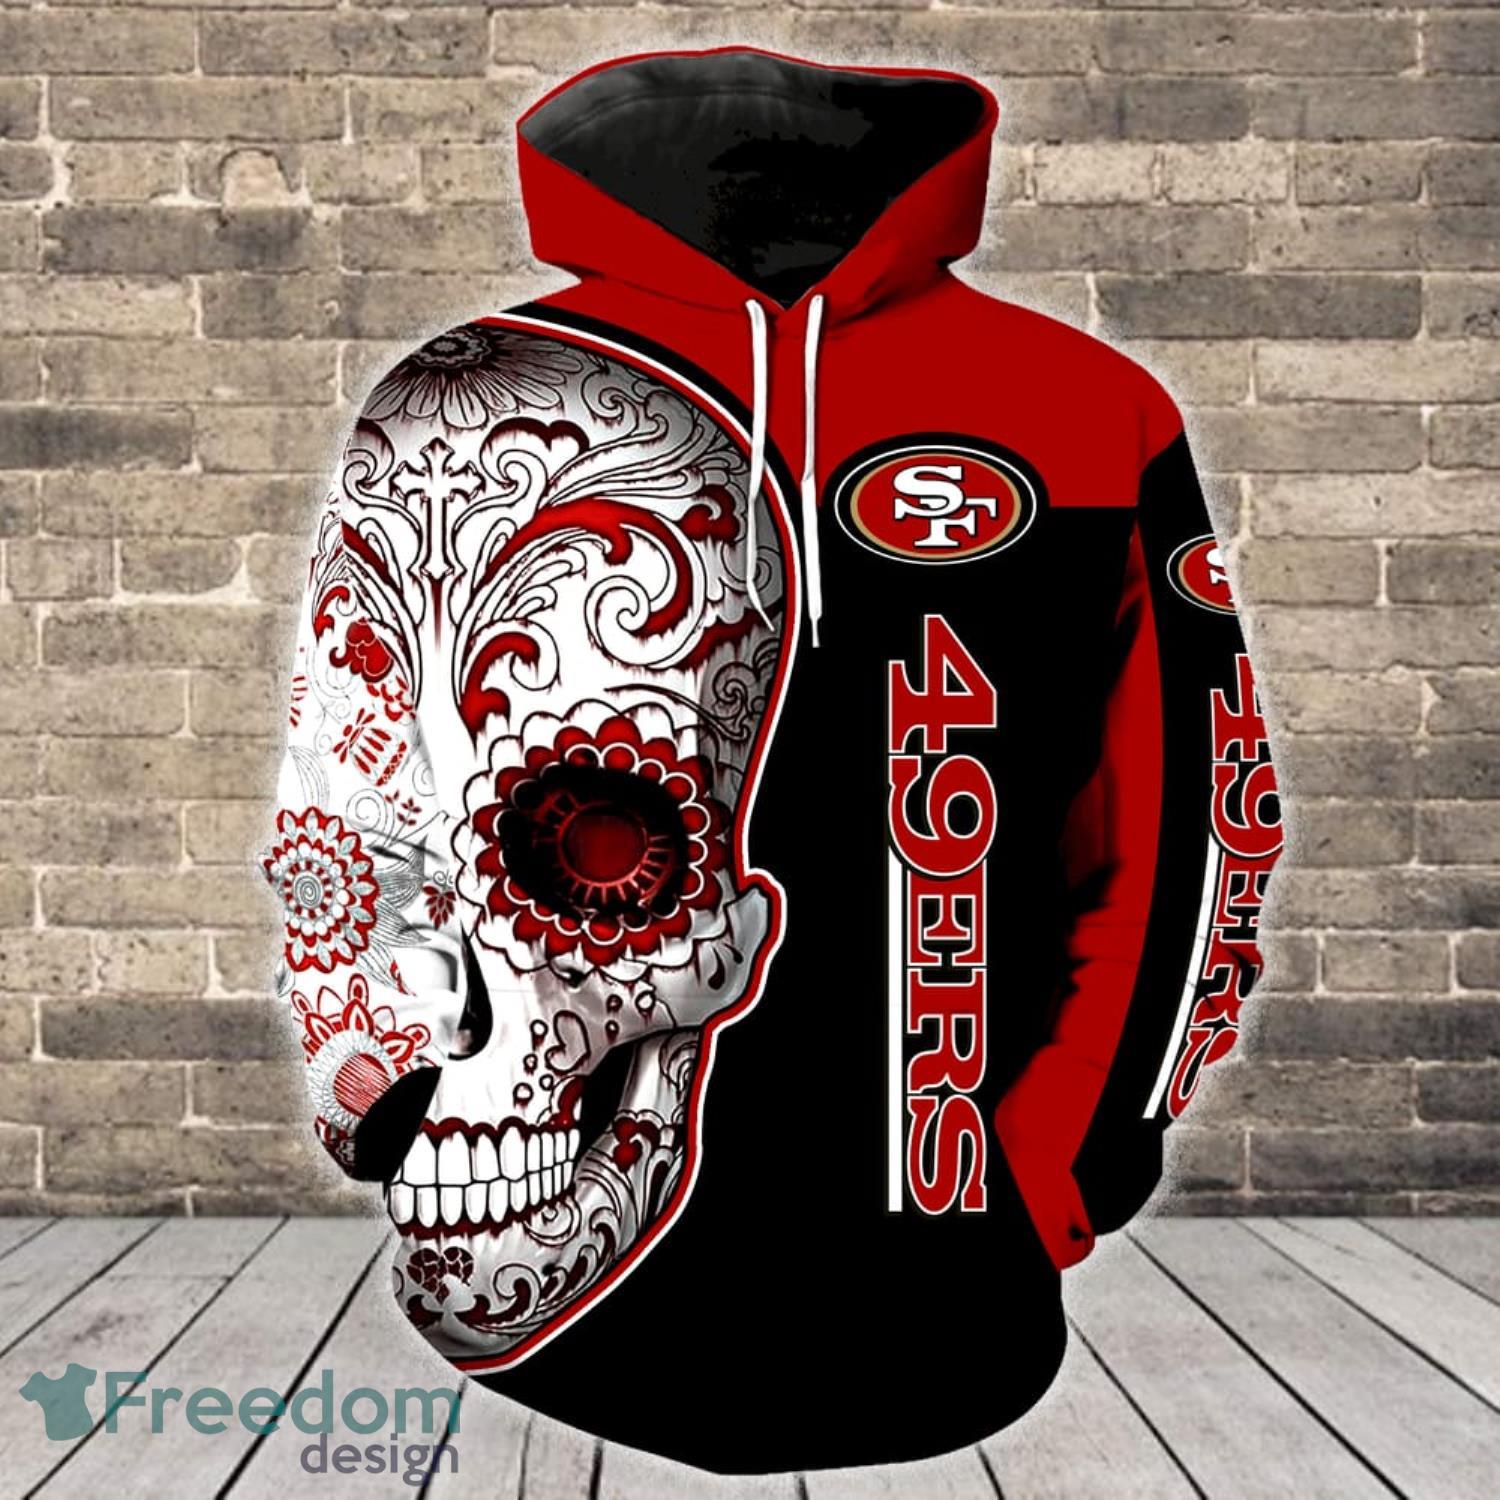 Slayer Skull Tampa Bay Buccaneers Shirt - High-Quality Printed Brand